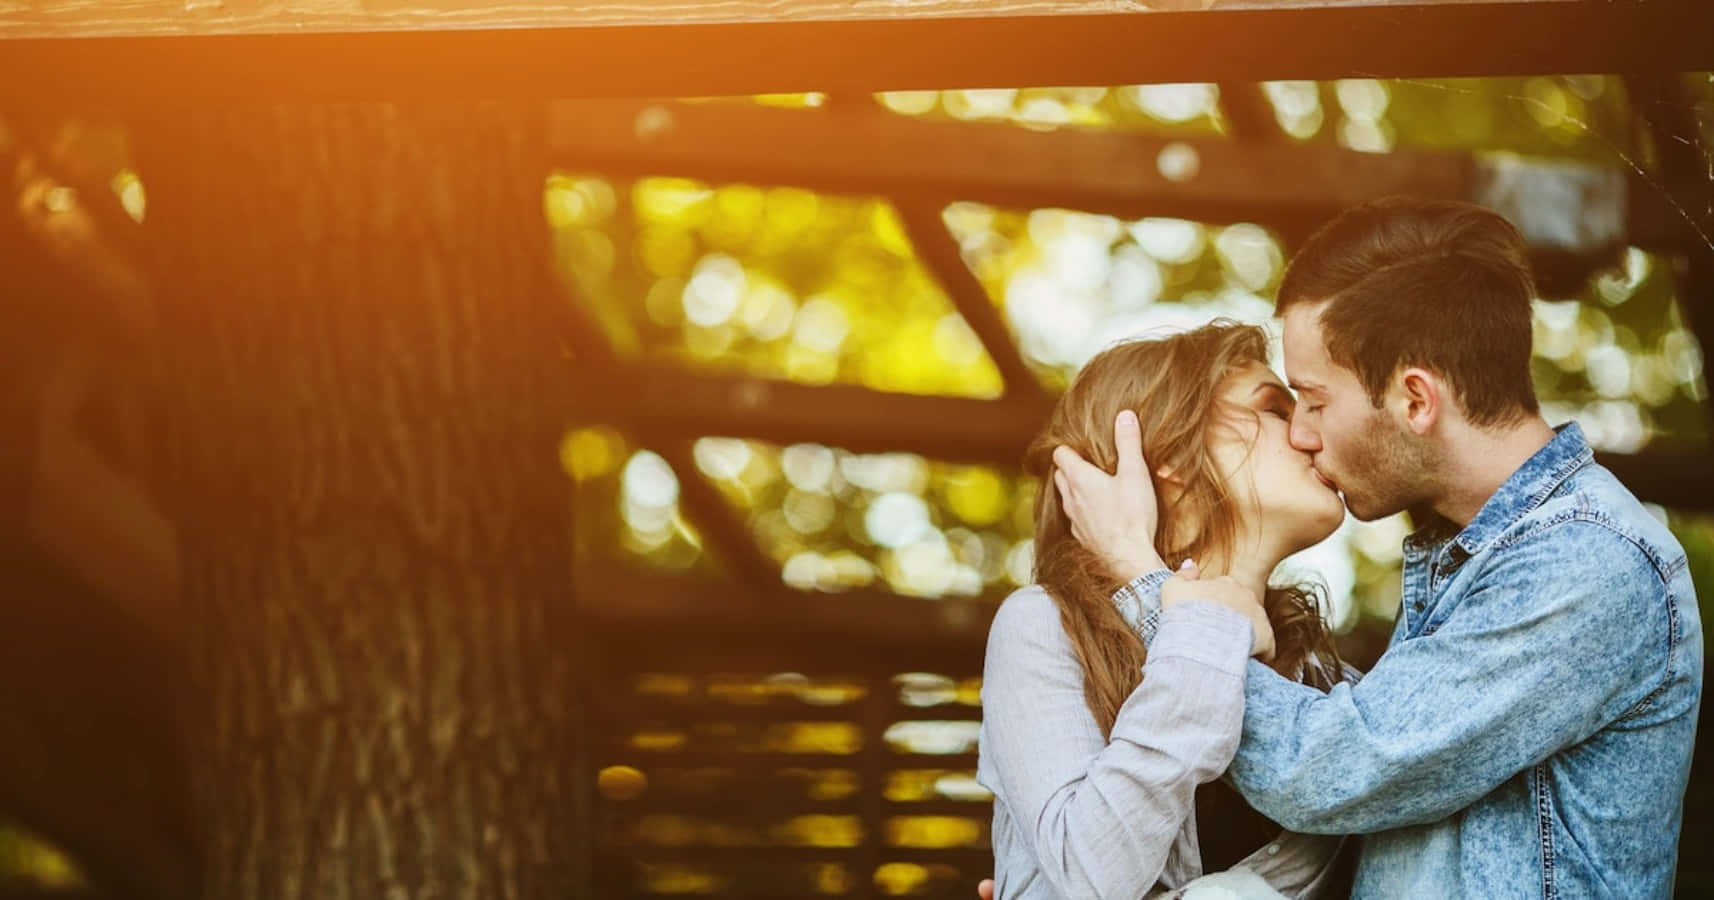 Celebrate your love through a romantic kiss